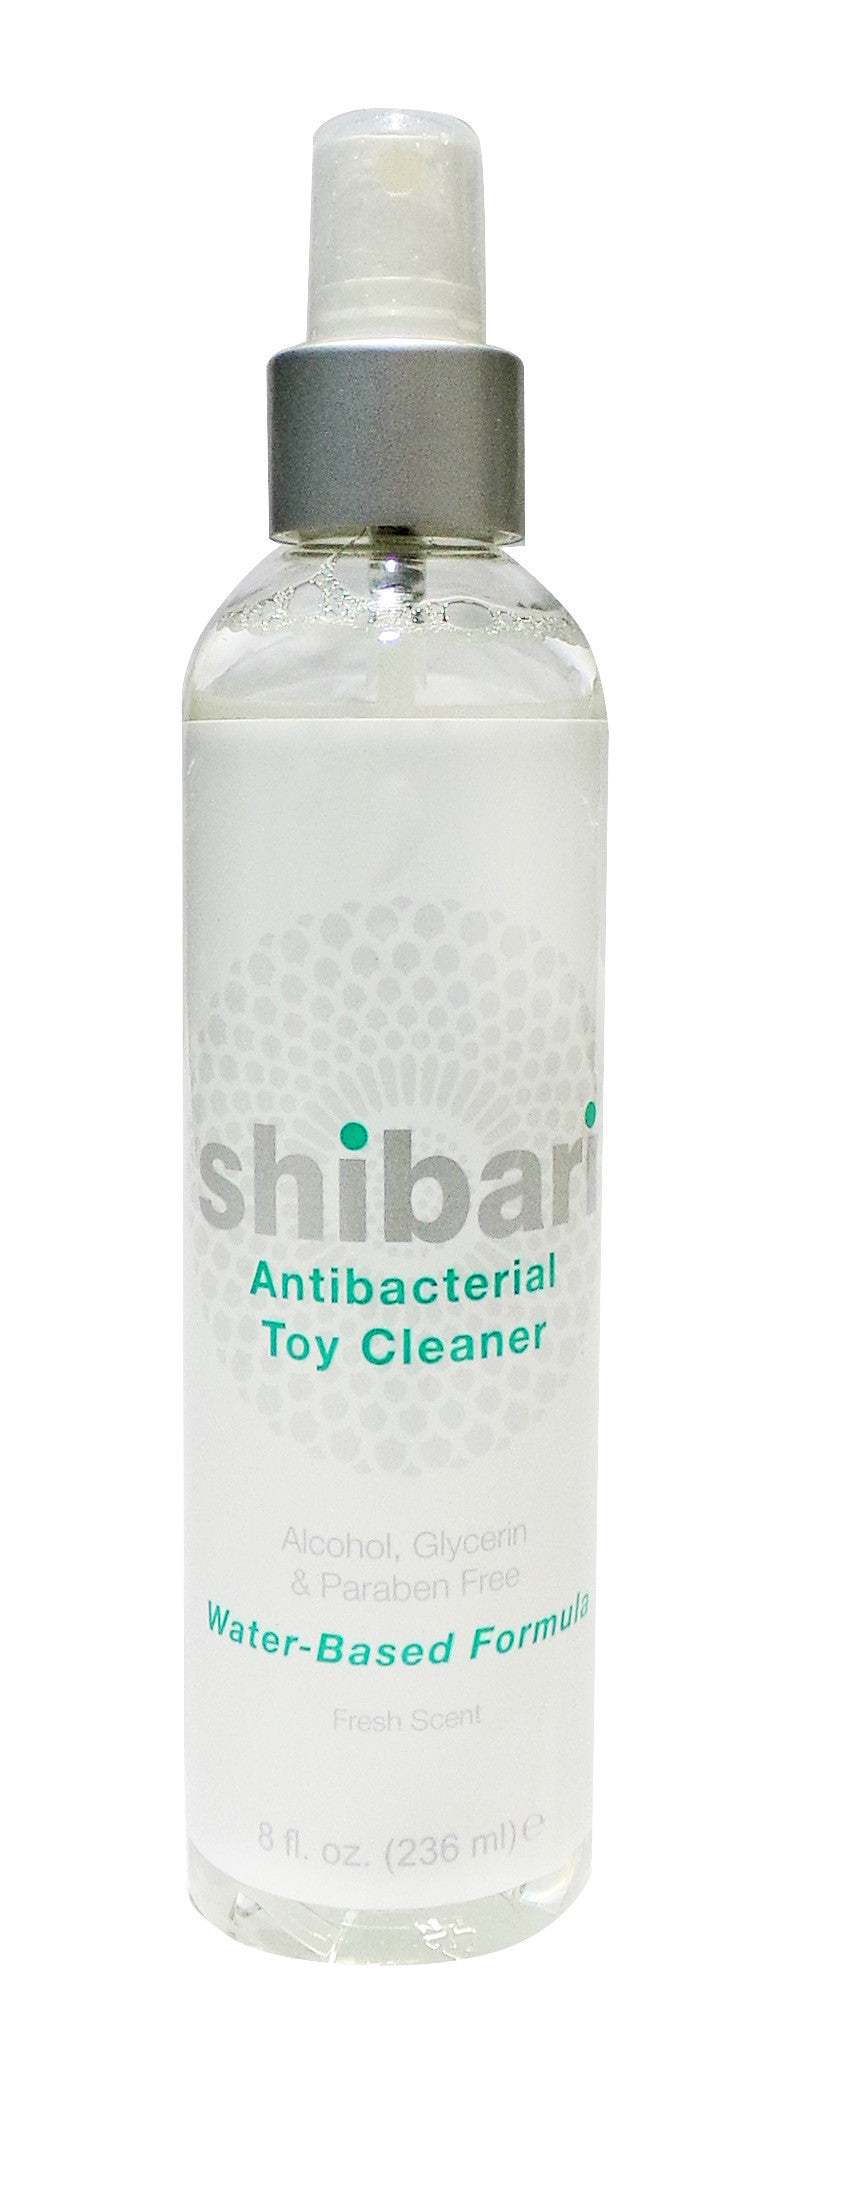 Shibari Antibacterial Toy Cleaner Water Based - Fresh Scent - 8 Fl. Oz.